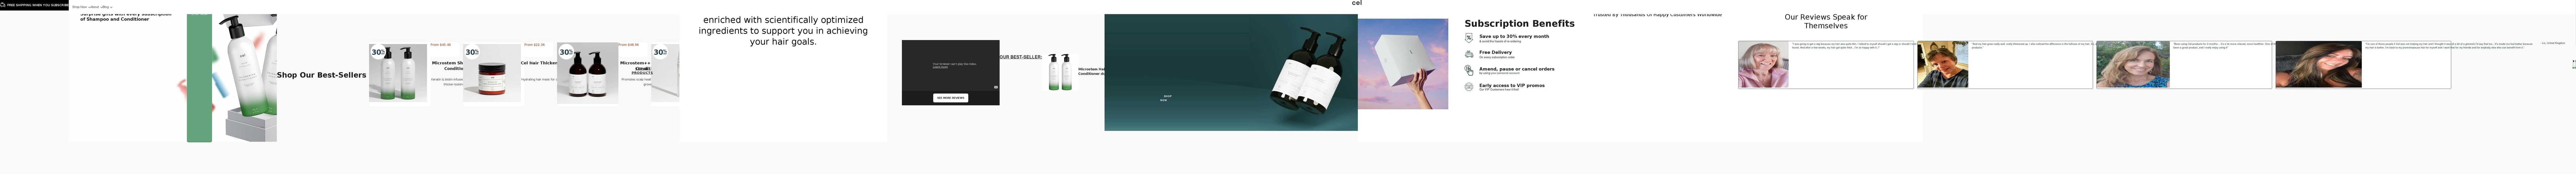 cel.md shopify website screenshot